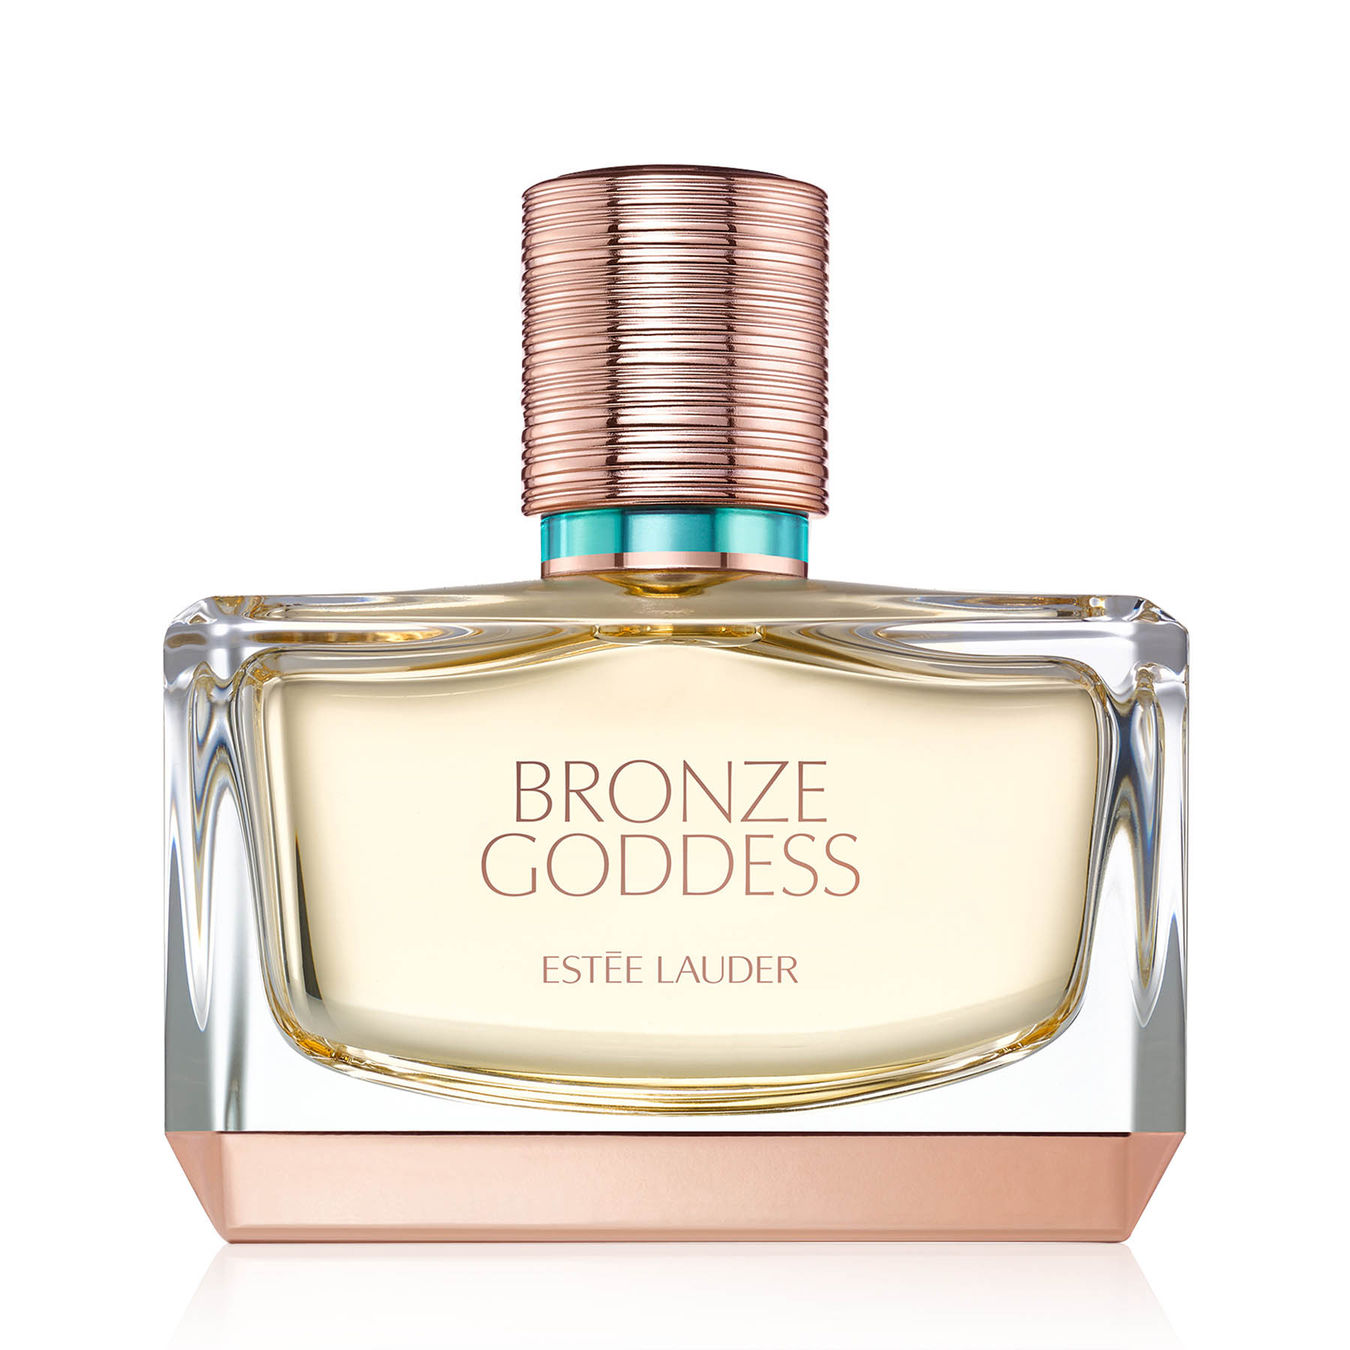 Bronze Goddess Eau Fraiche Est E Lauder Perfume A New Fragrance For Women